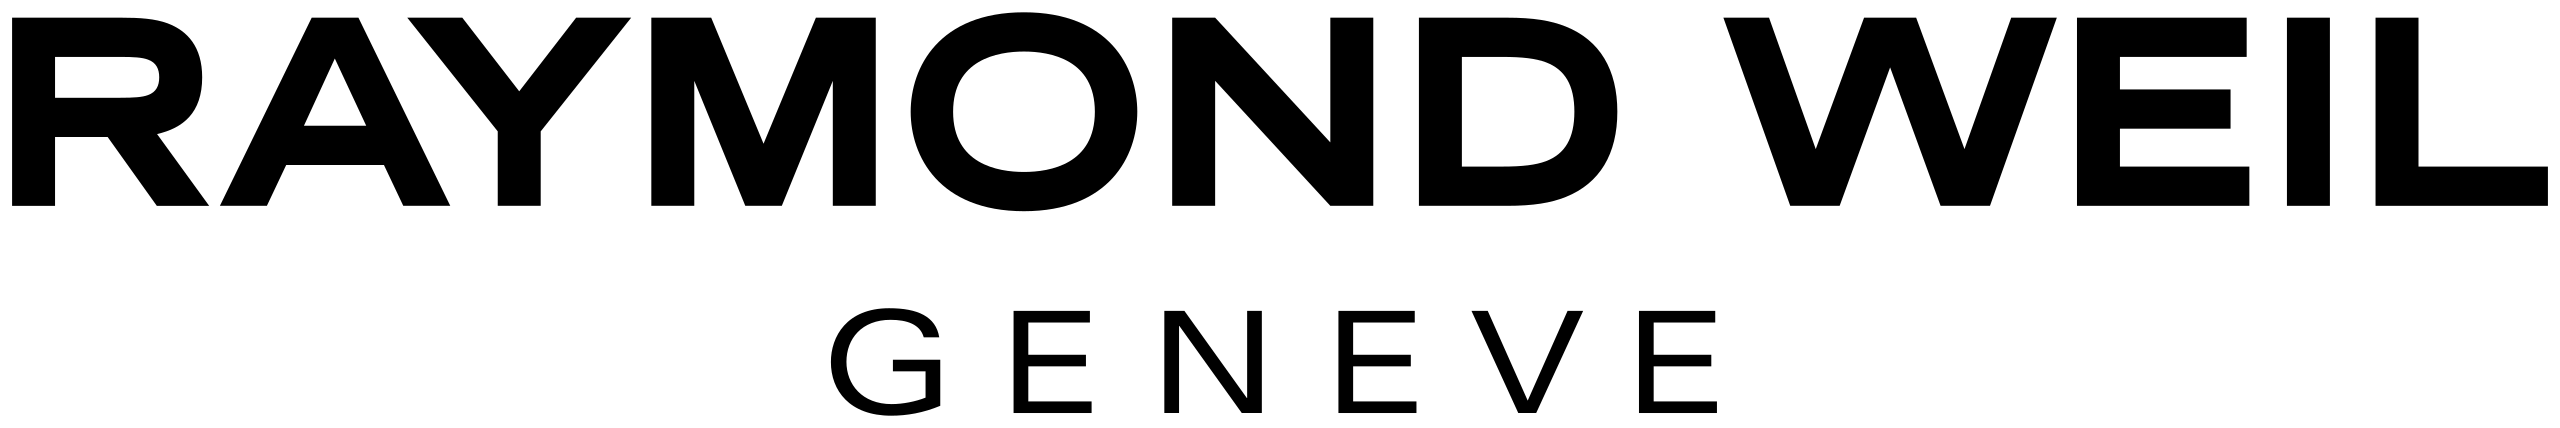 File:TAG Heuer Logo.svg - Wikipedia